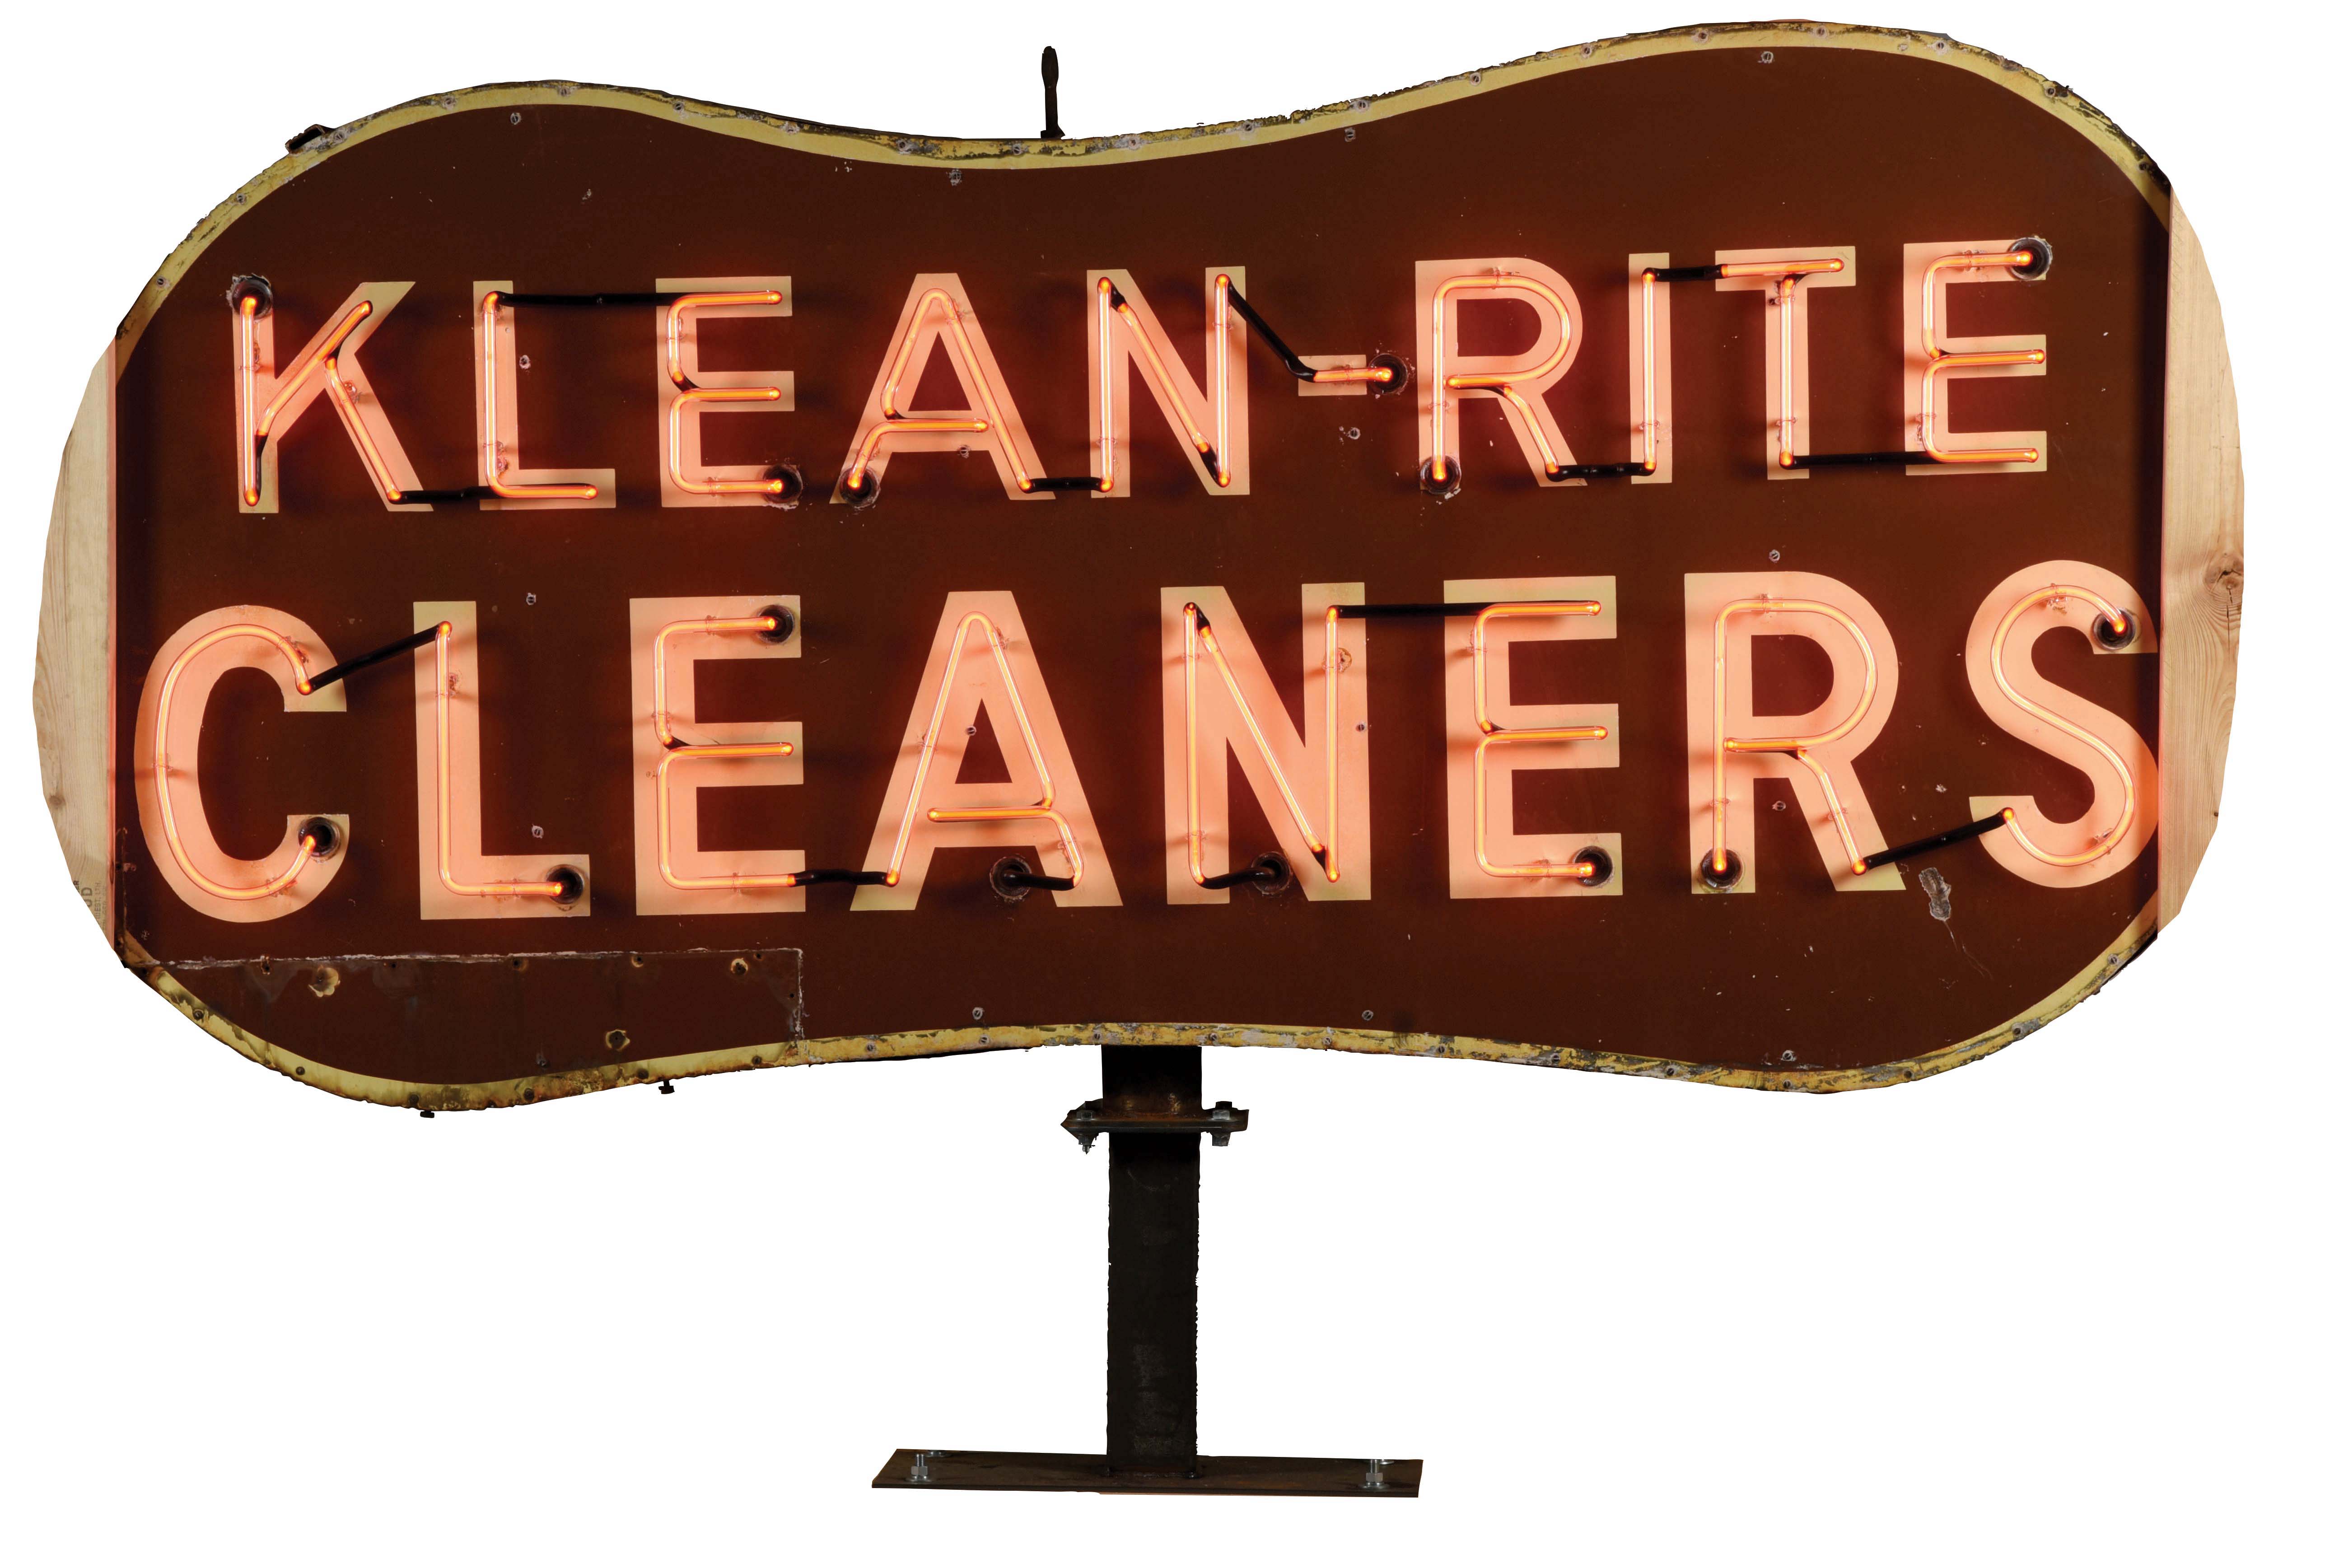 KLEAN-RITE CLEANERS DIE CUT PORCELAIN NEON SIGN.